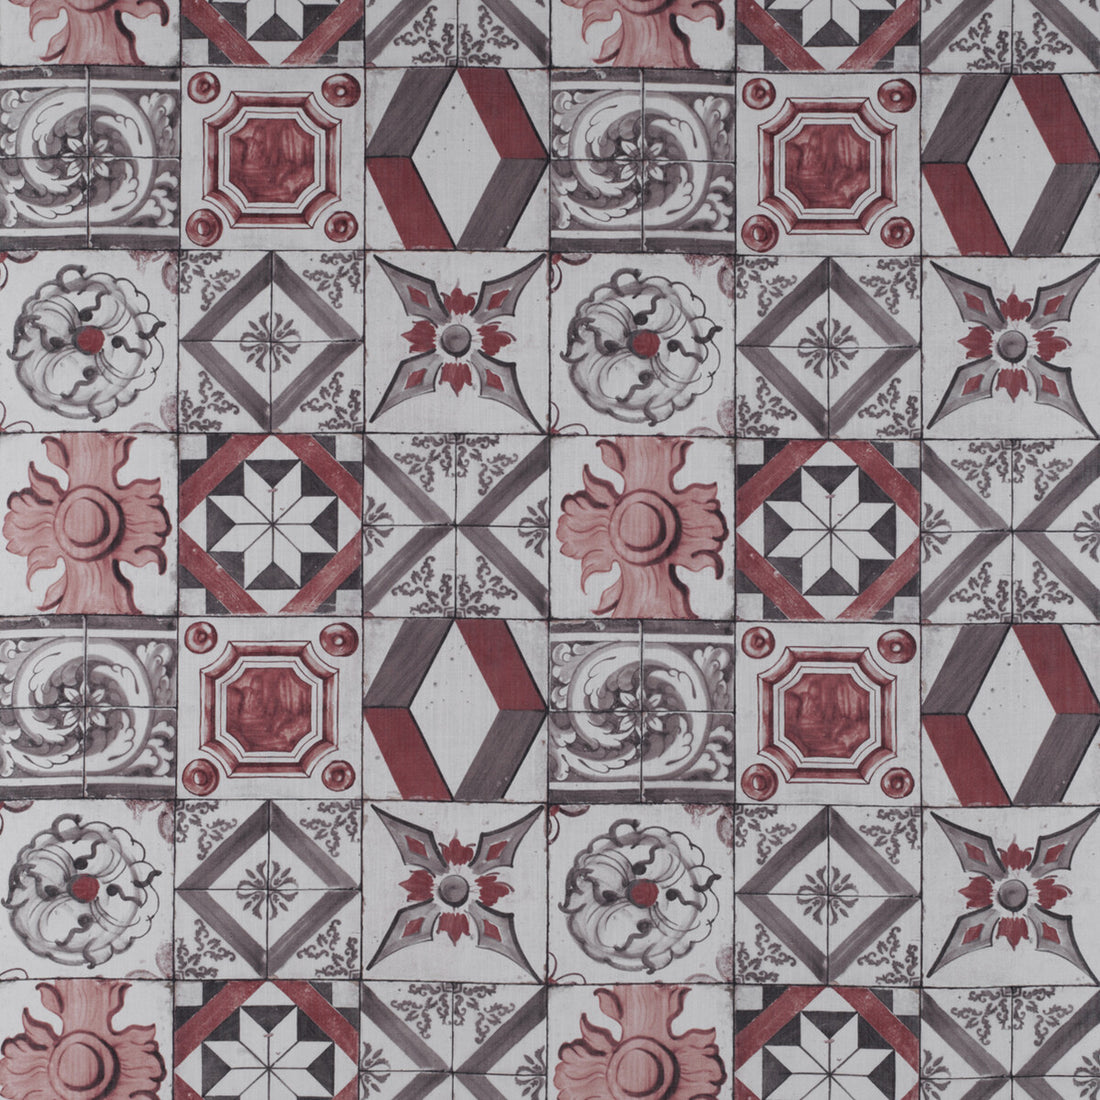 Trastevere fabric in rojo/marron color - pattern GDT5332.001.0 - by Gaston y Daniela in the Tierras collection